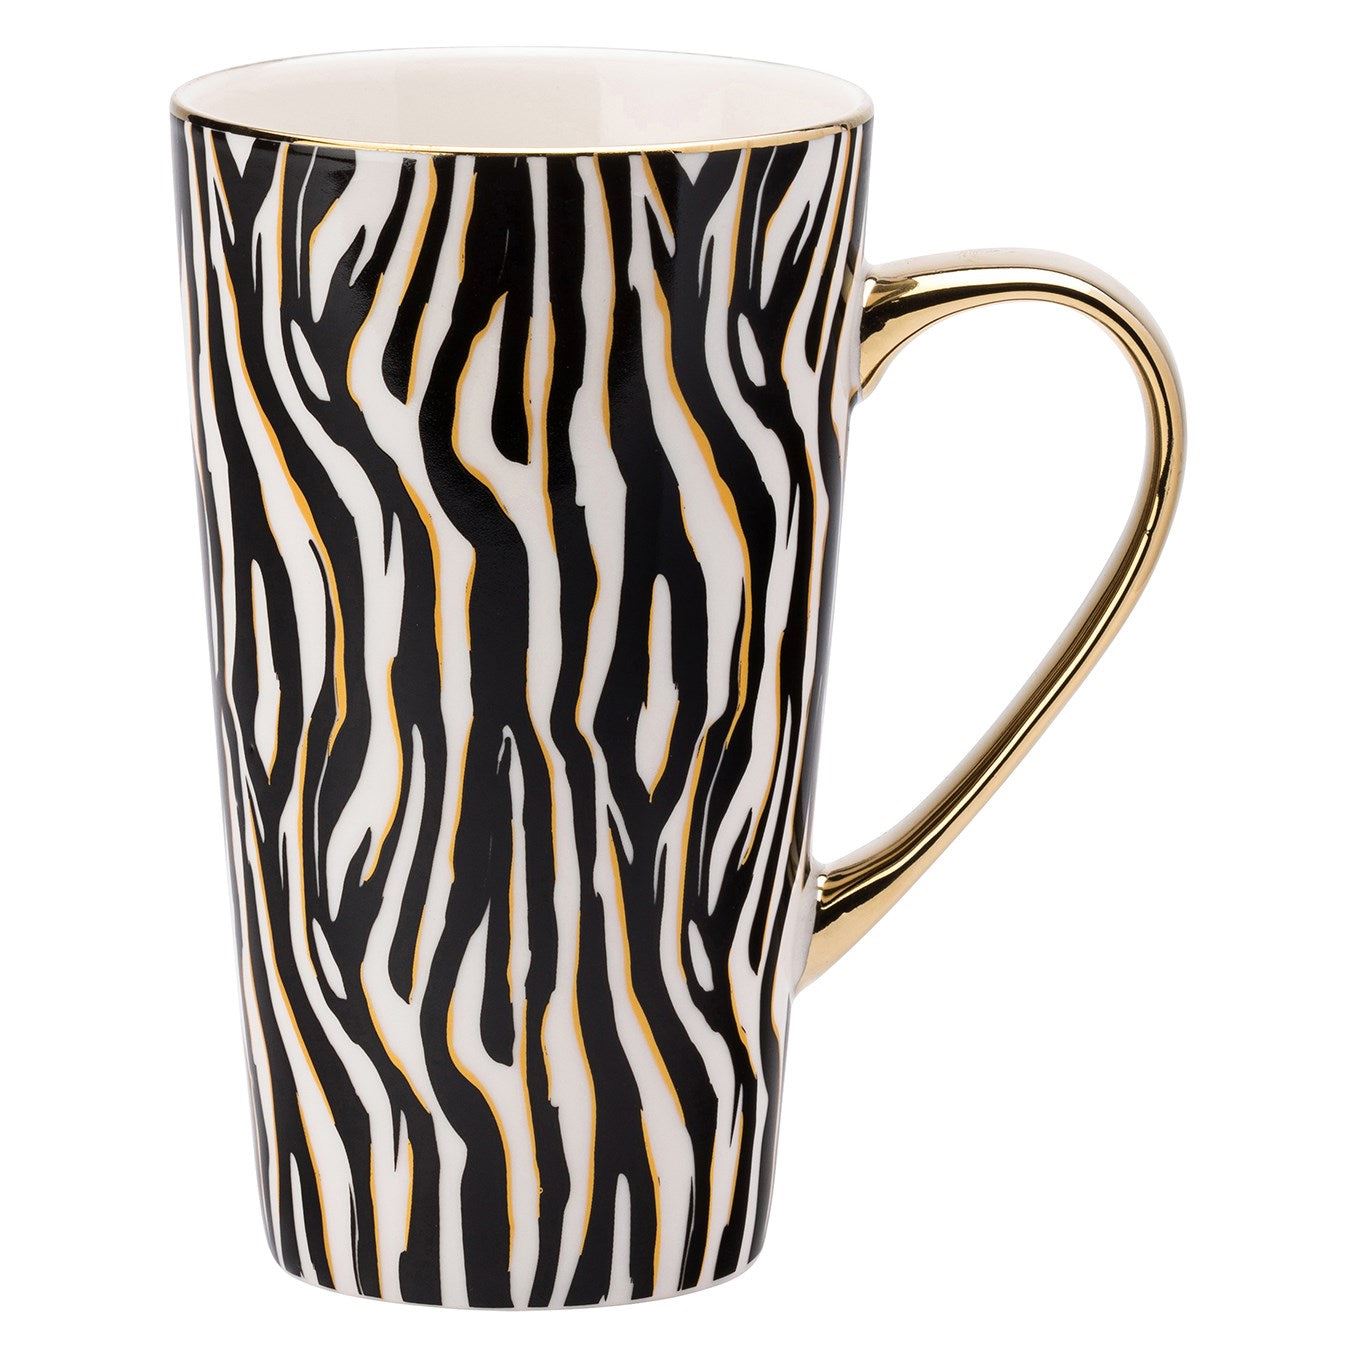 Looking Wild Zebra Latte Mug